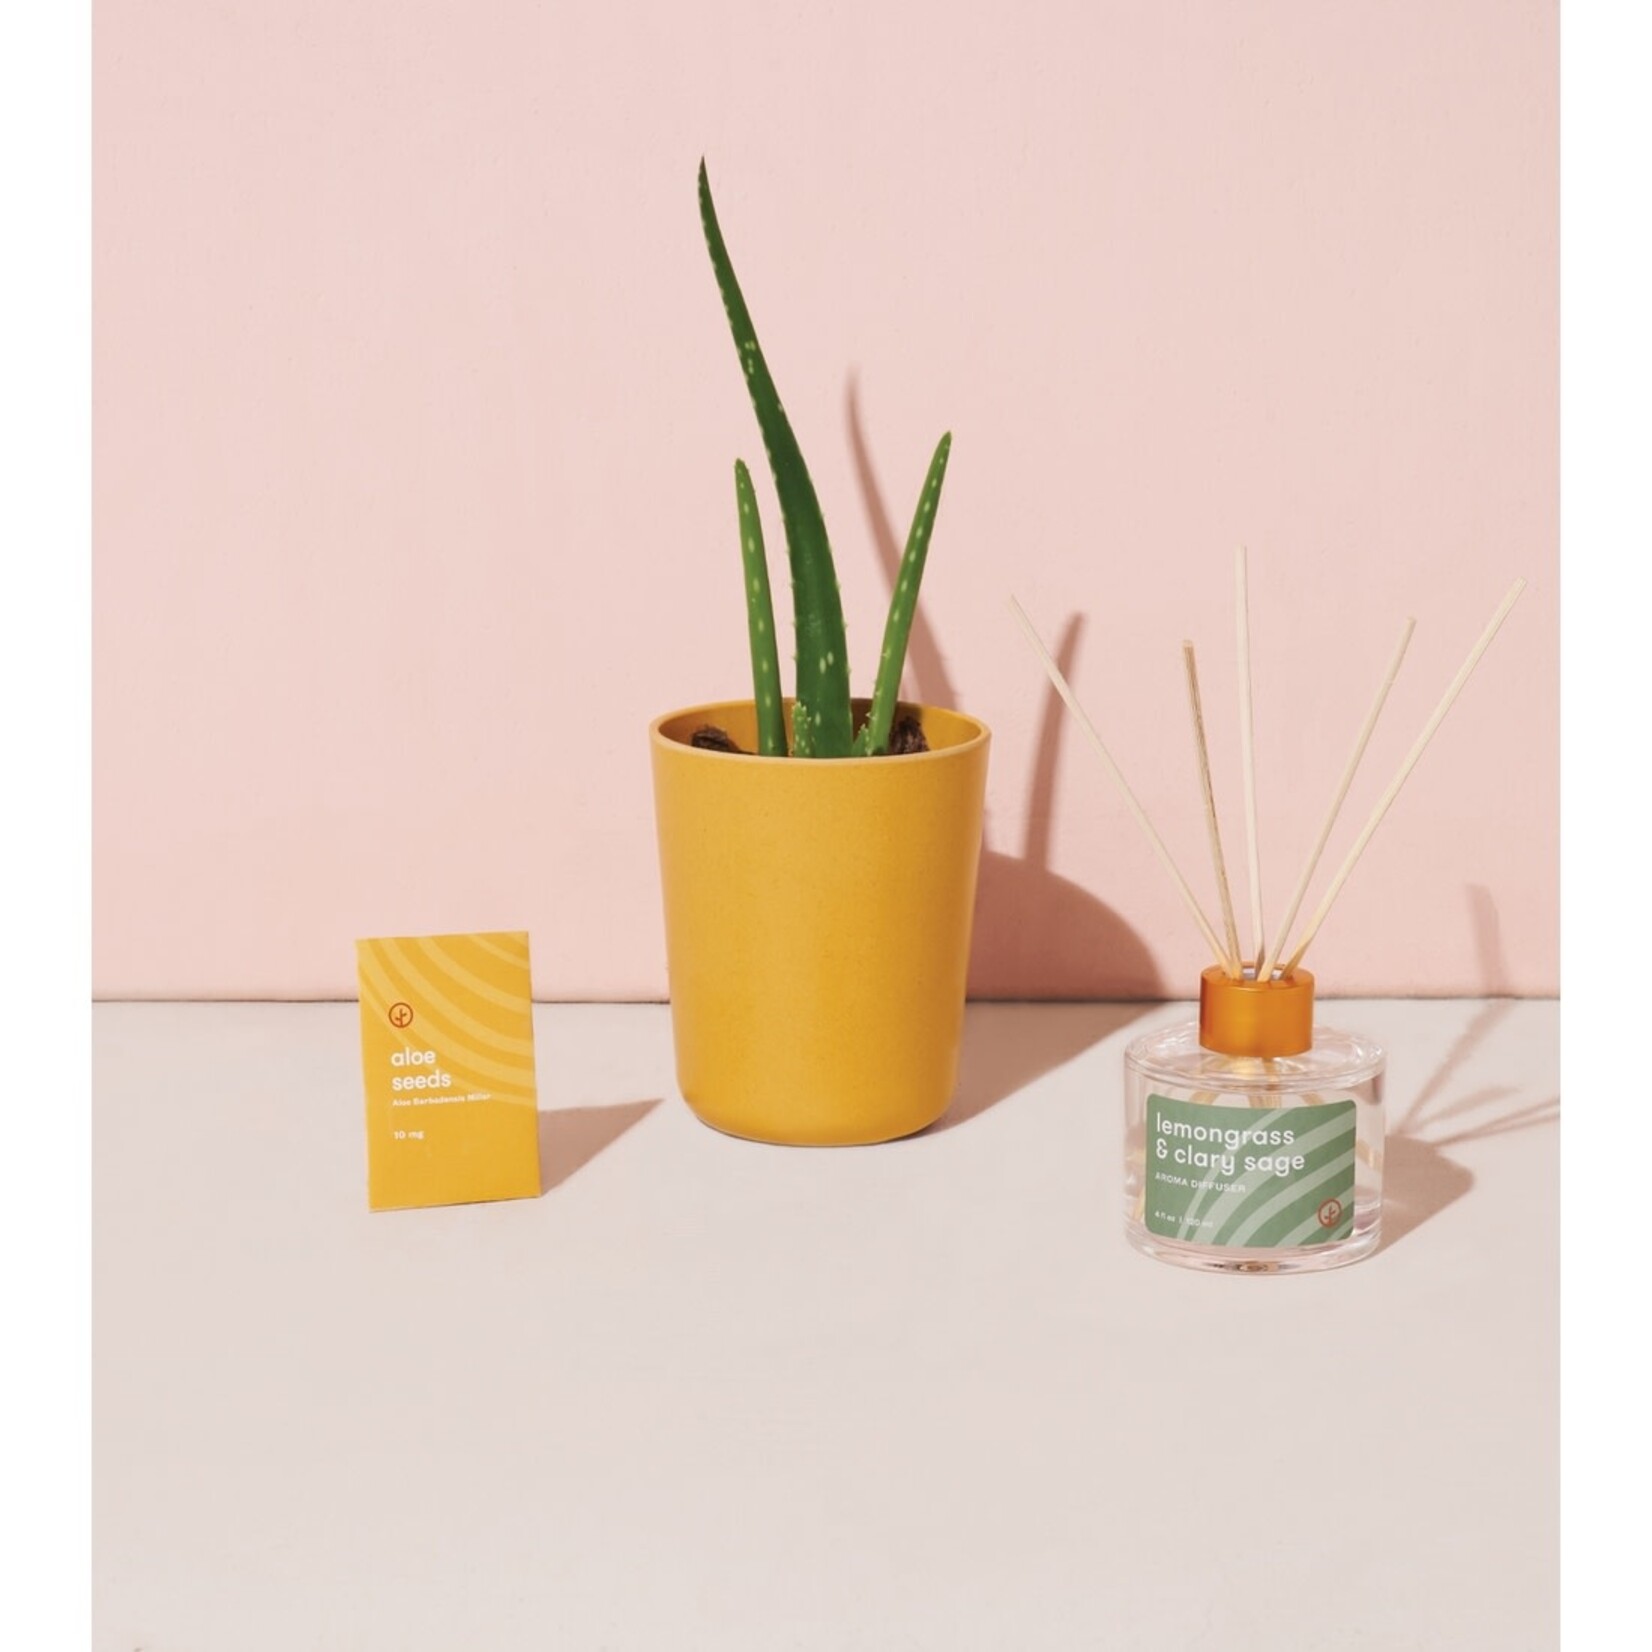 Modern Sprout Find Balance - Grounding Aloe Kit